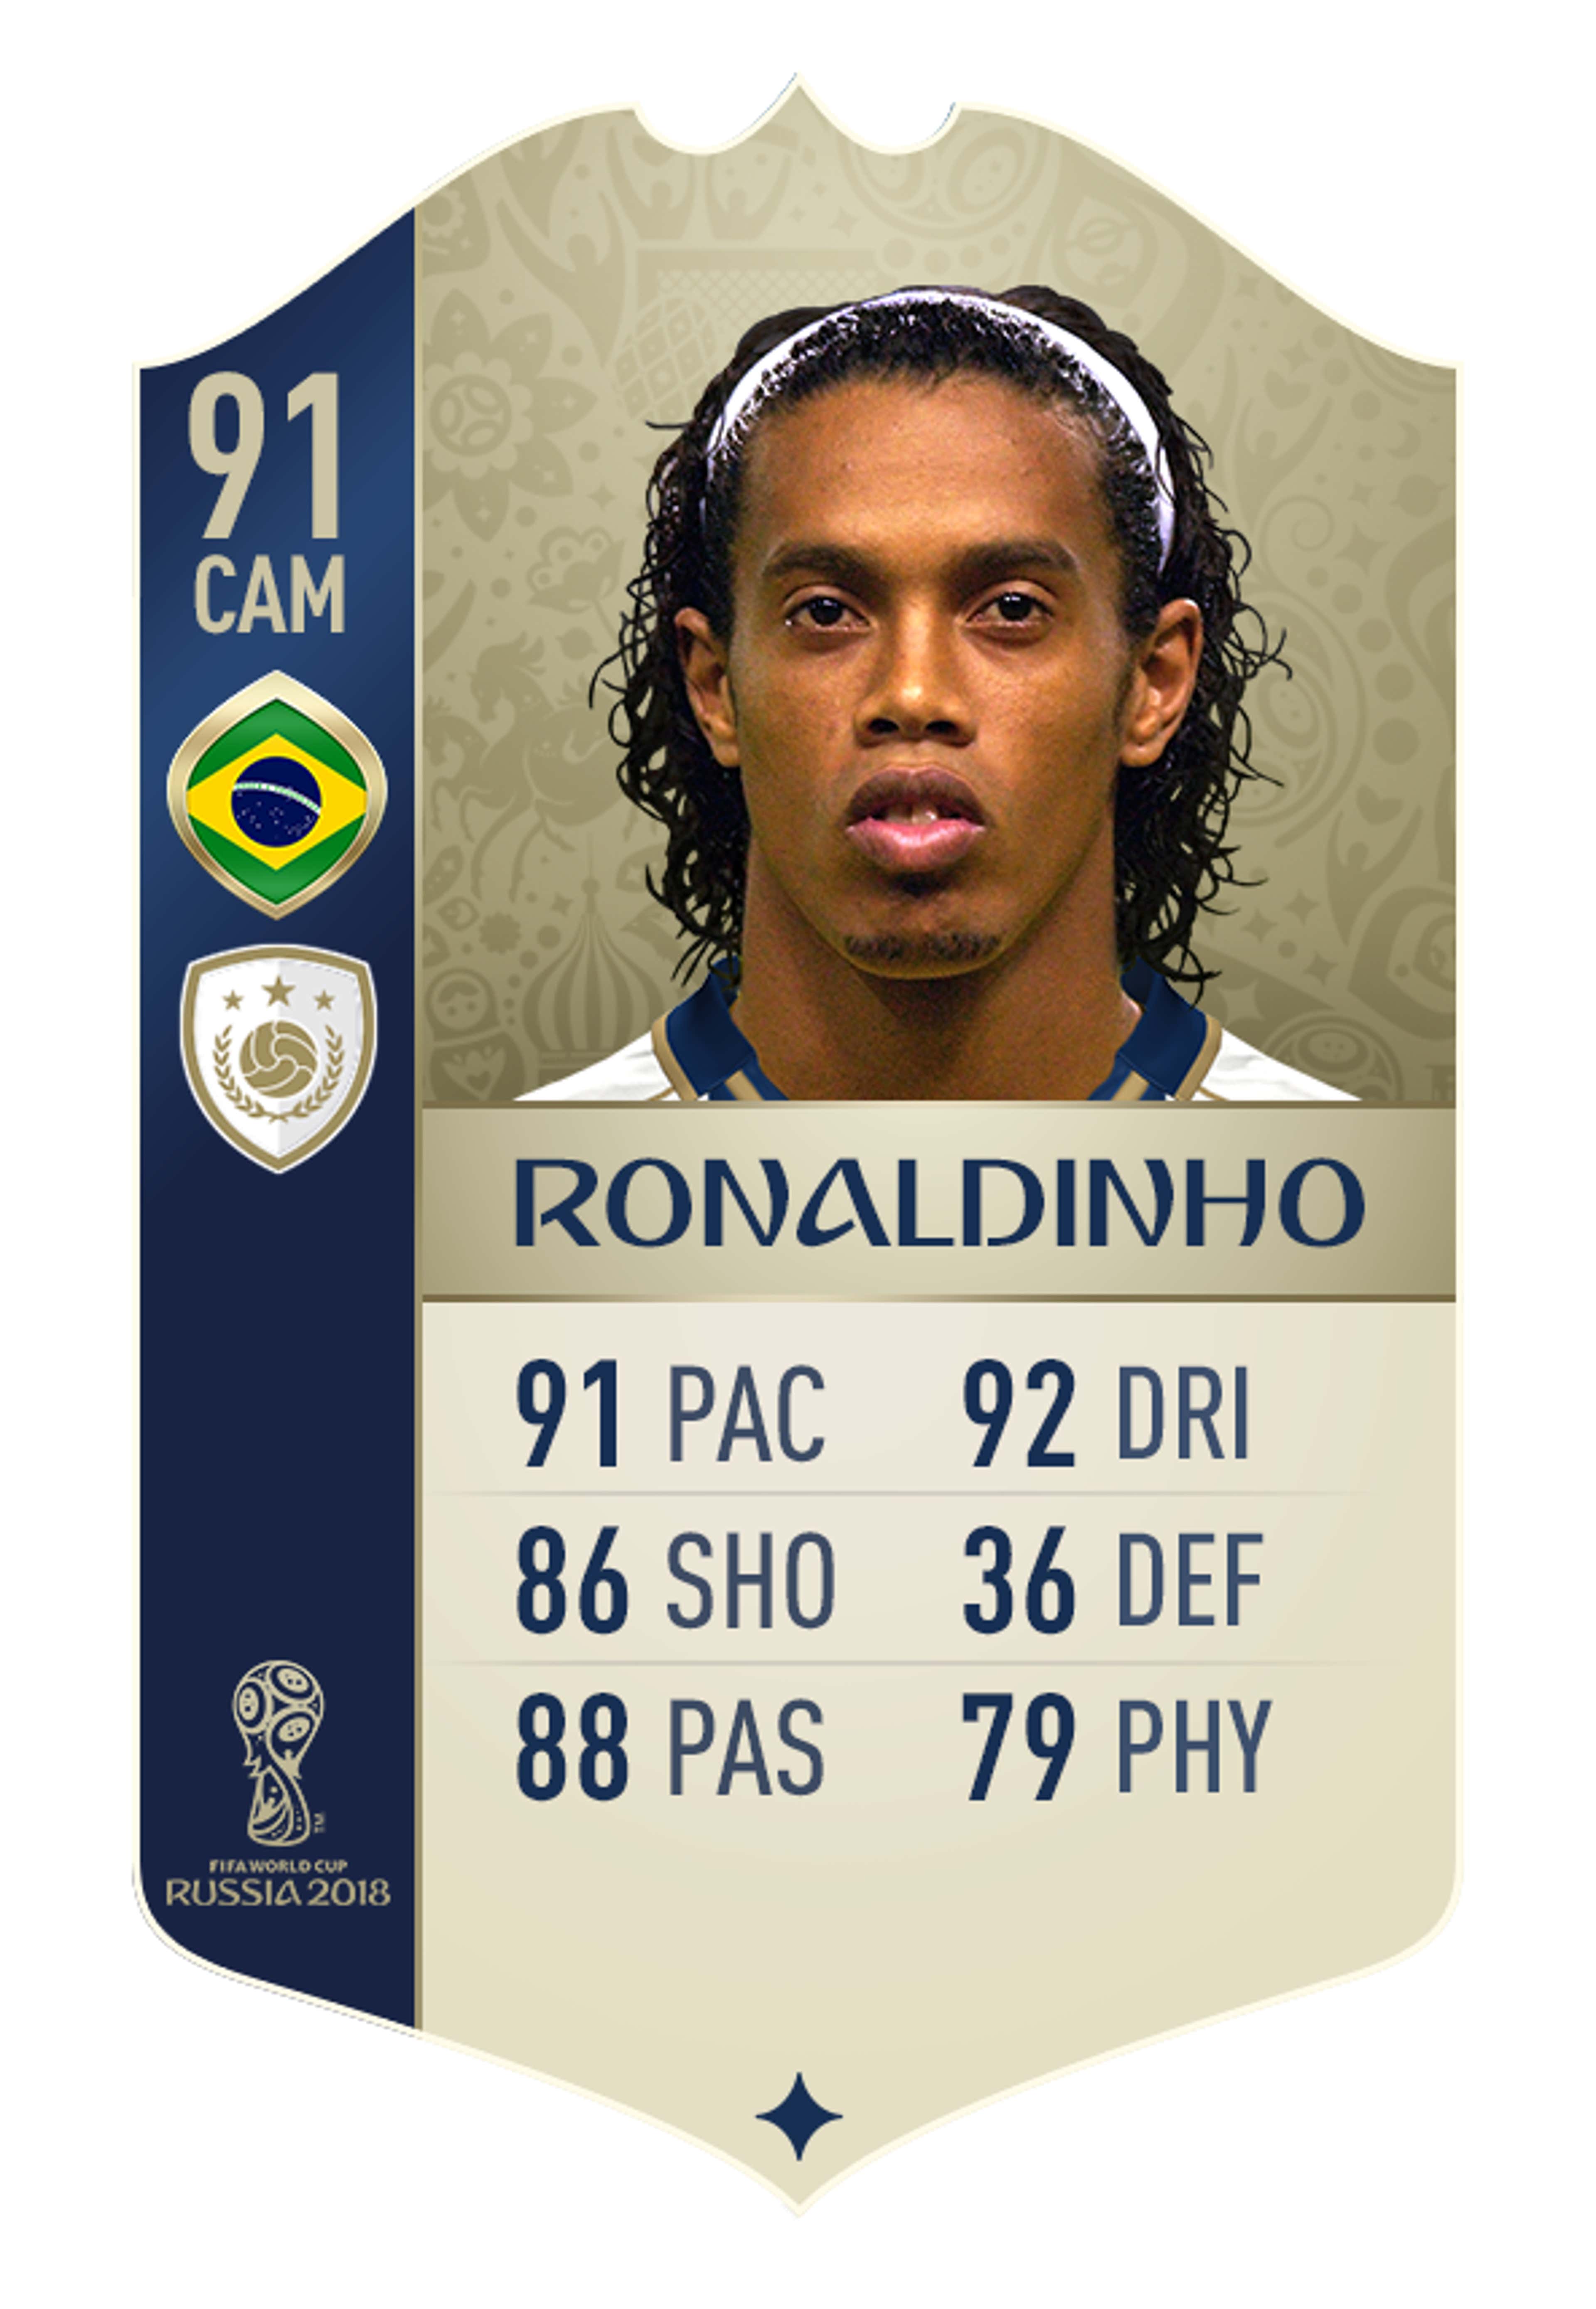 Ronaldinho FIFA 18 World Cup Icons